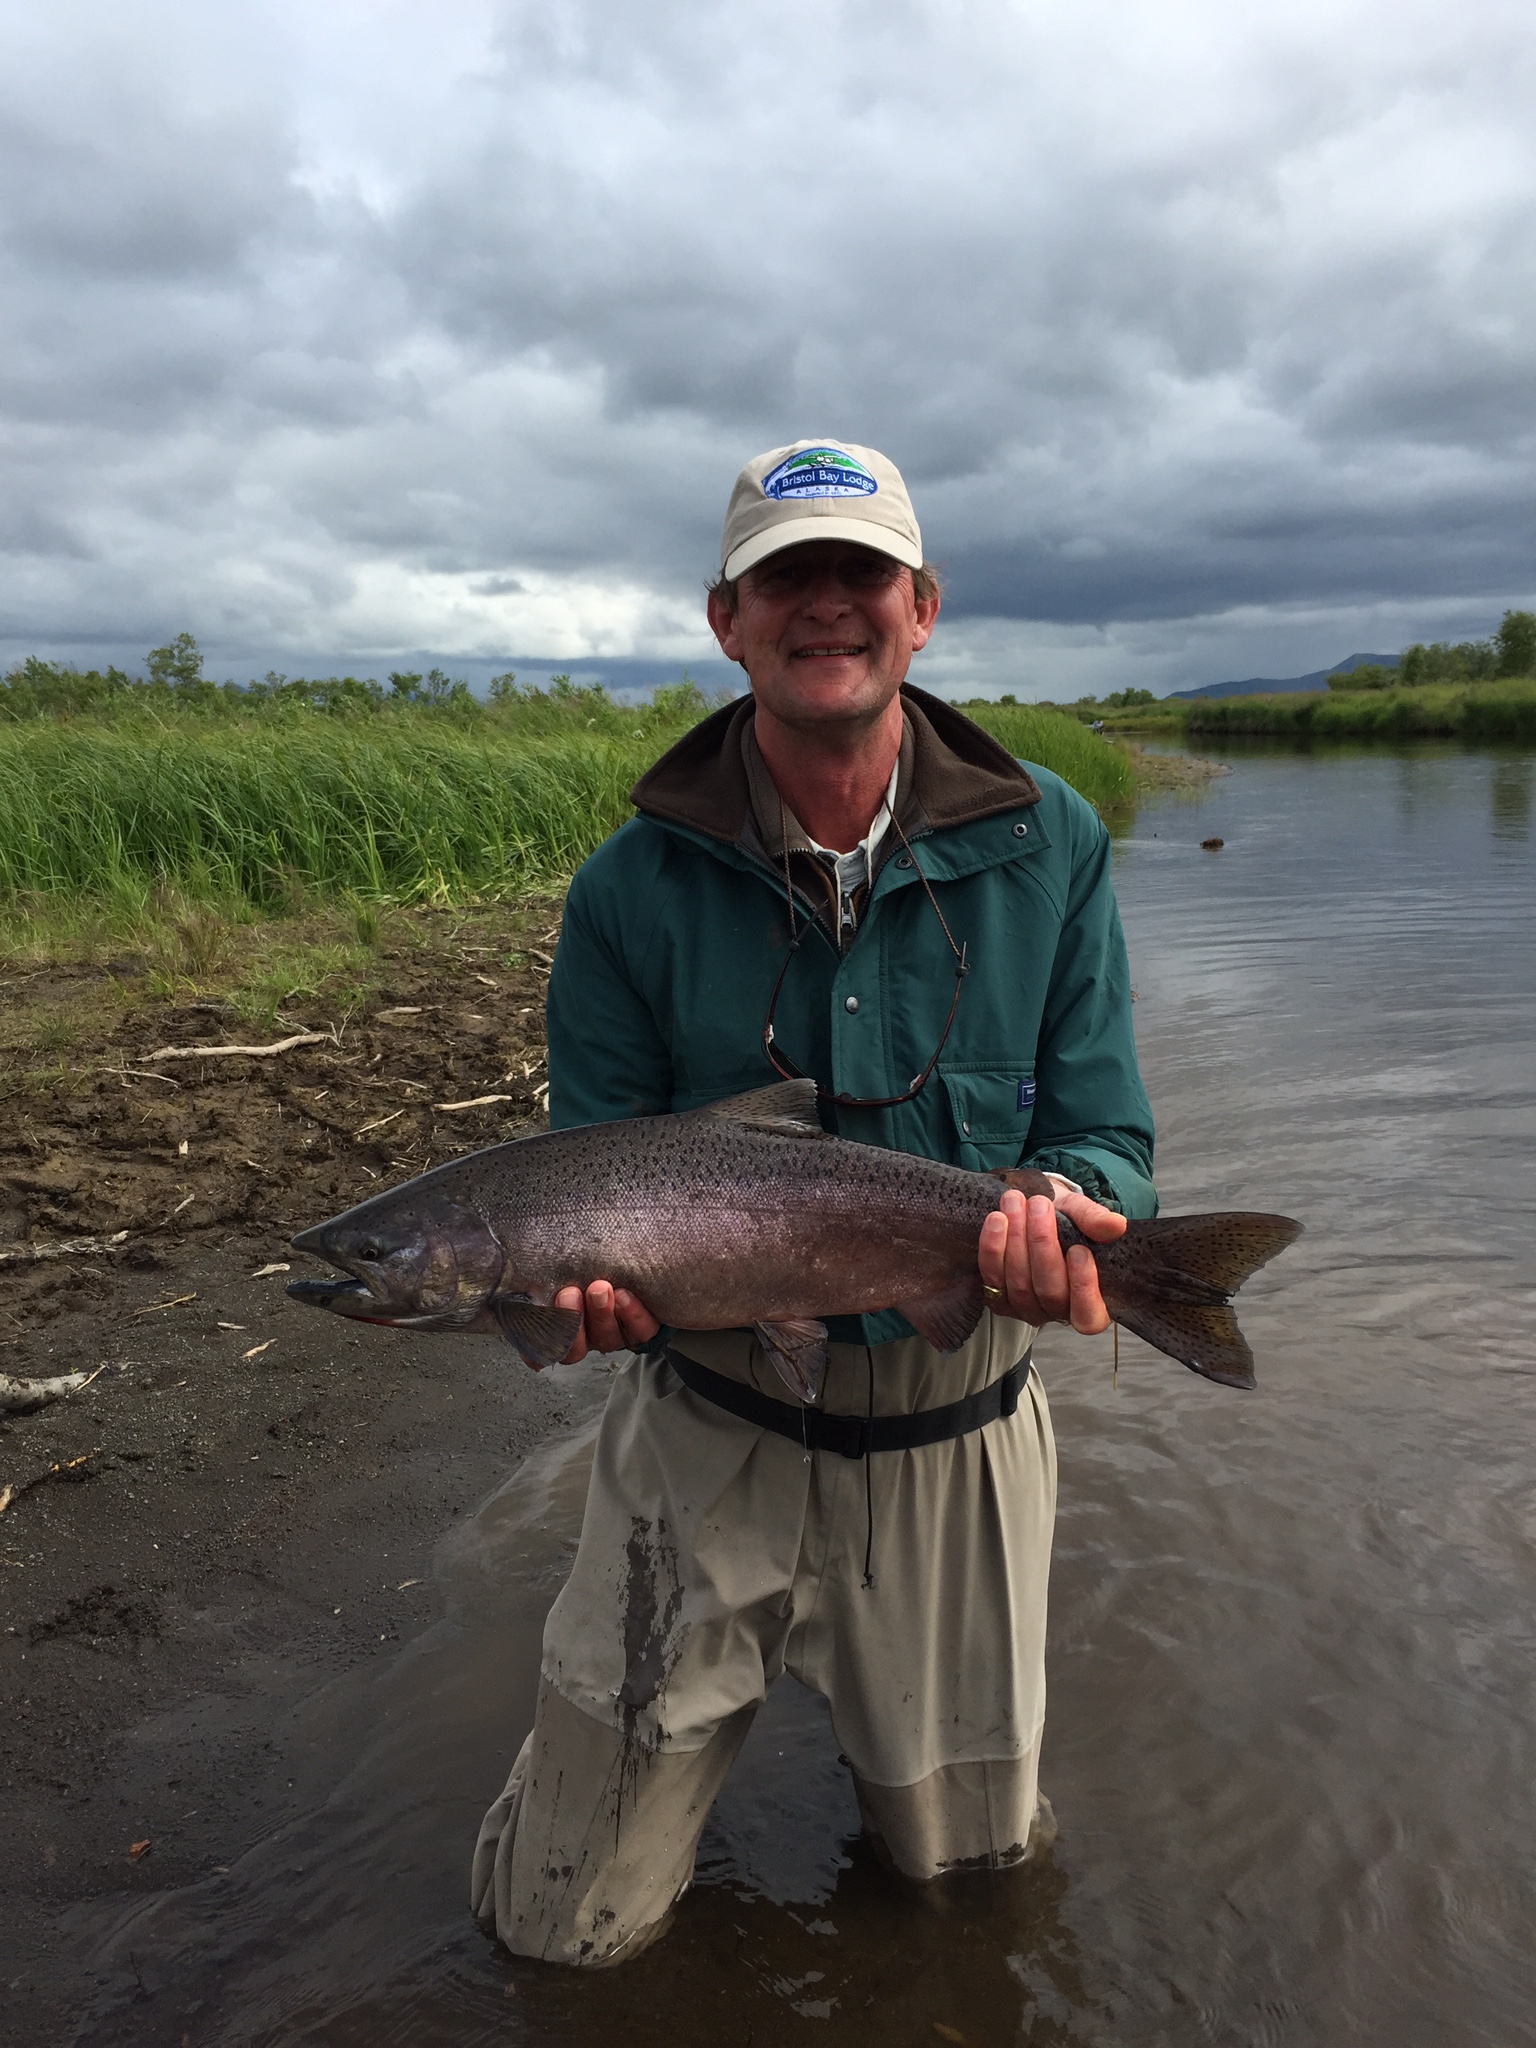 King Salmon from Alaska